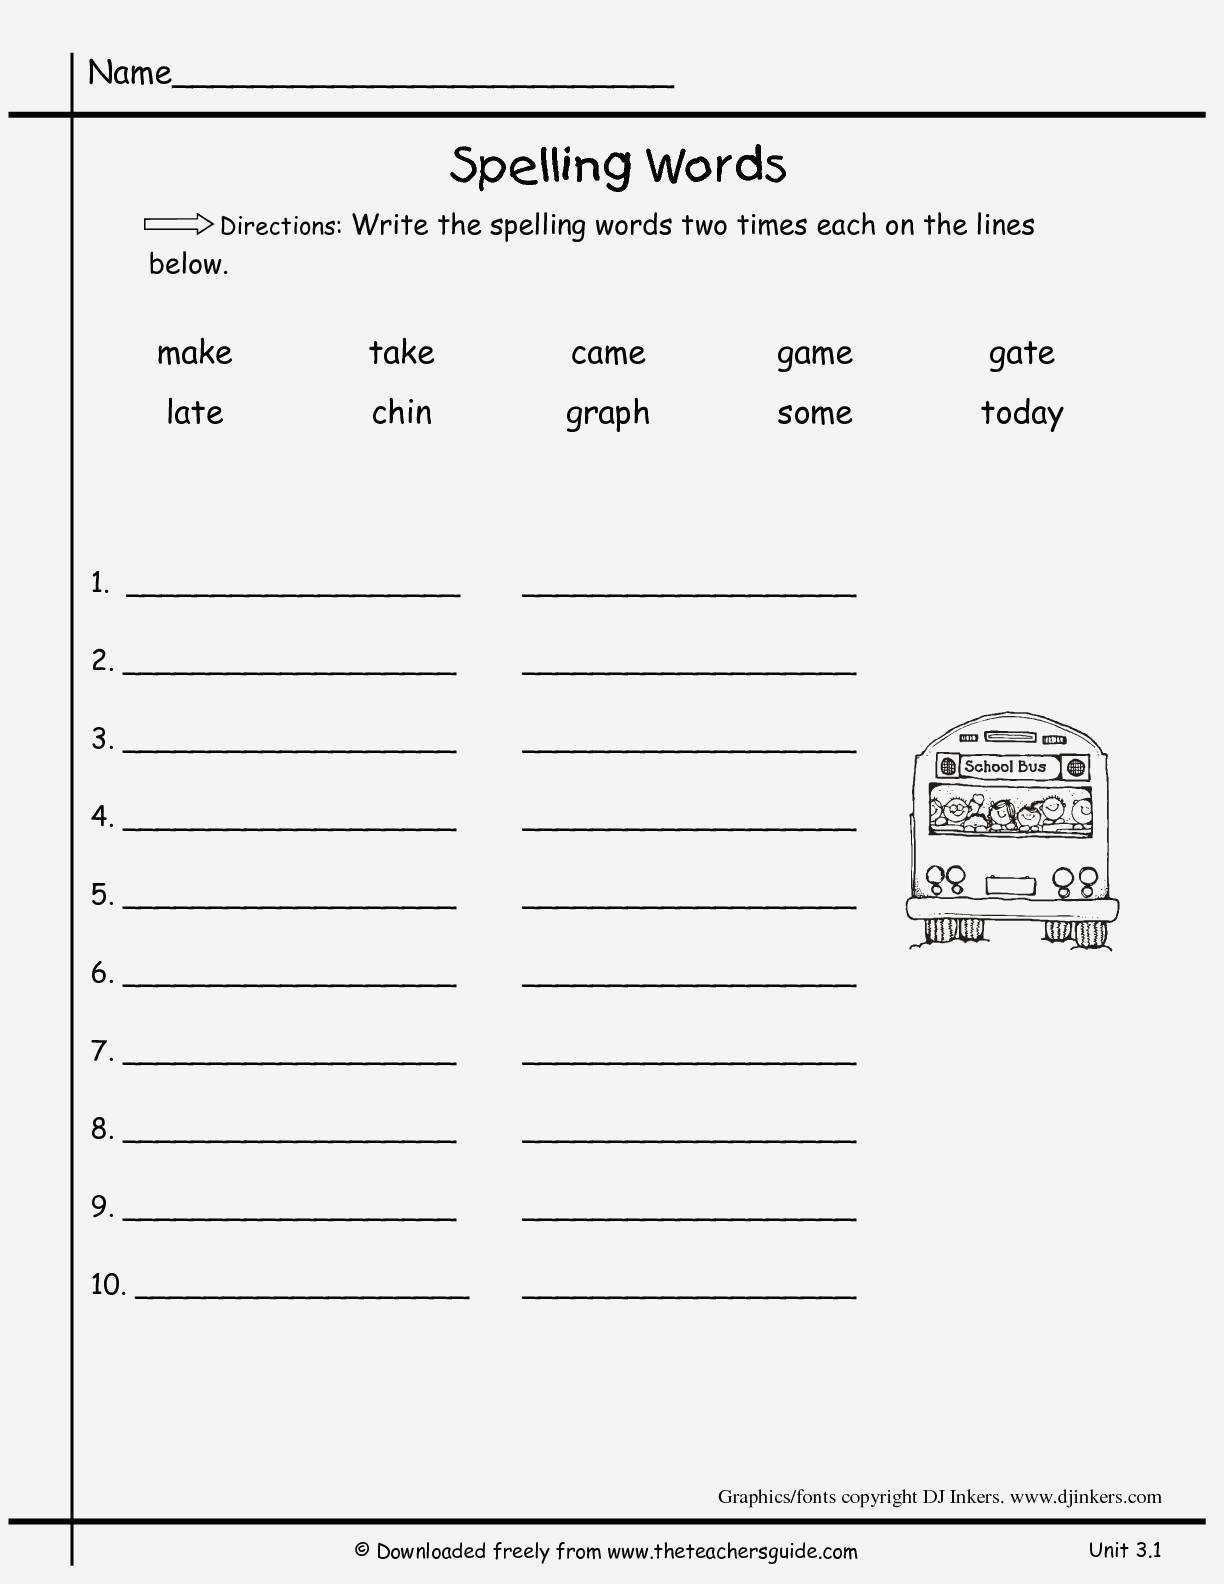 Spelling Worksheets 2nd Graders 2nd Grade Spelling Worksheets for Educations 2nd Grade